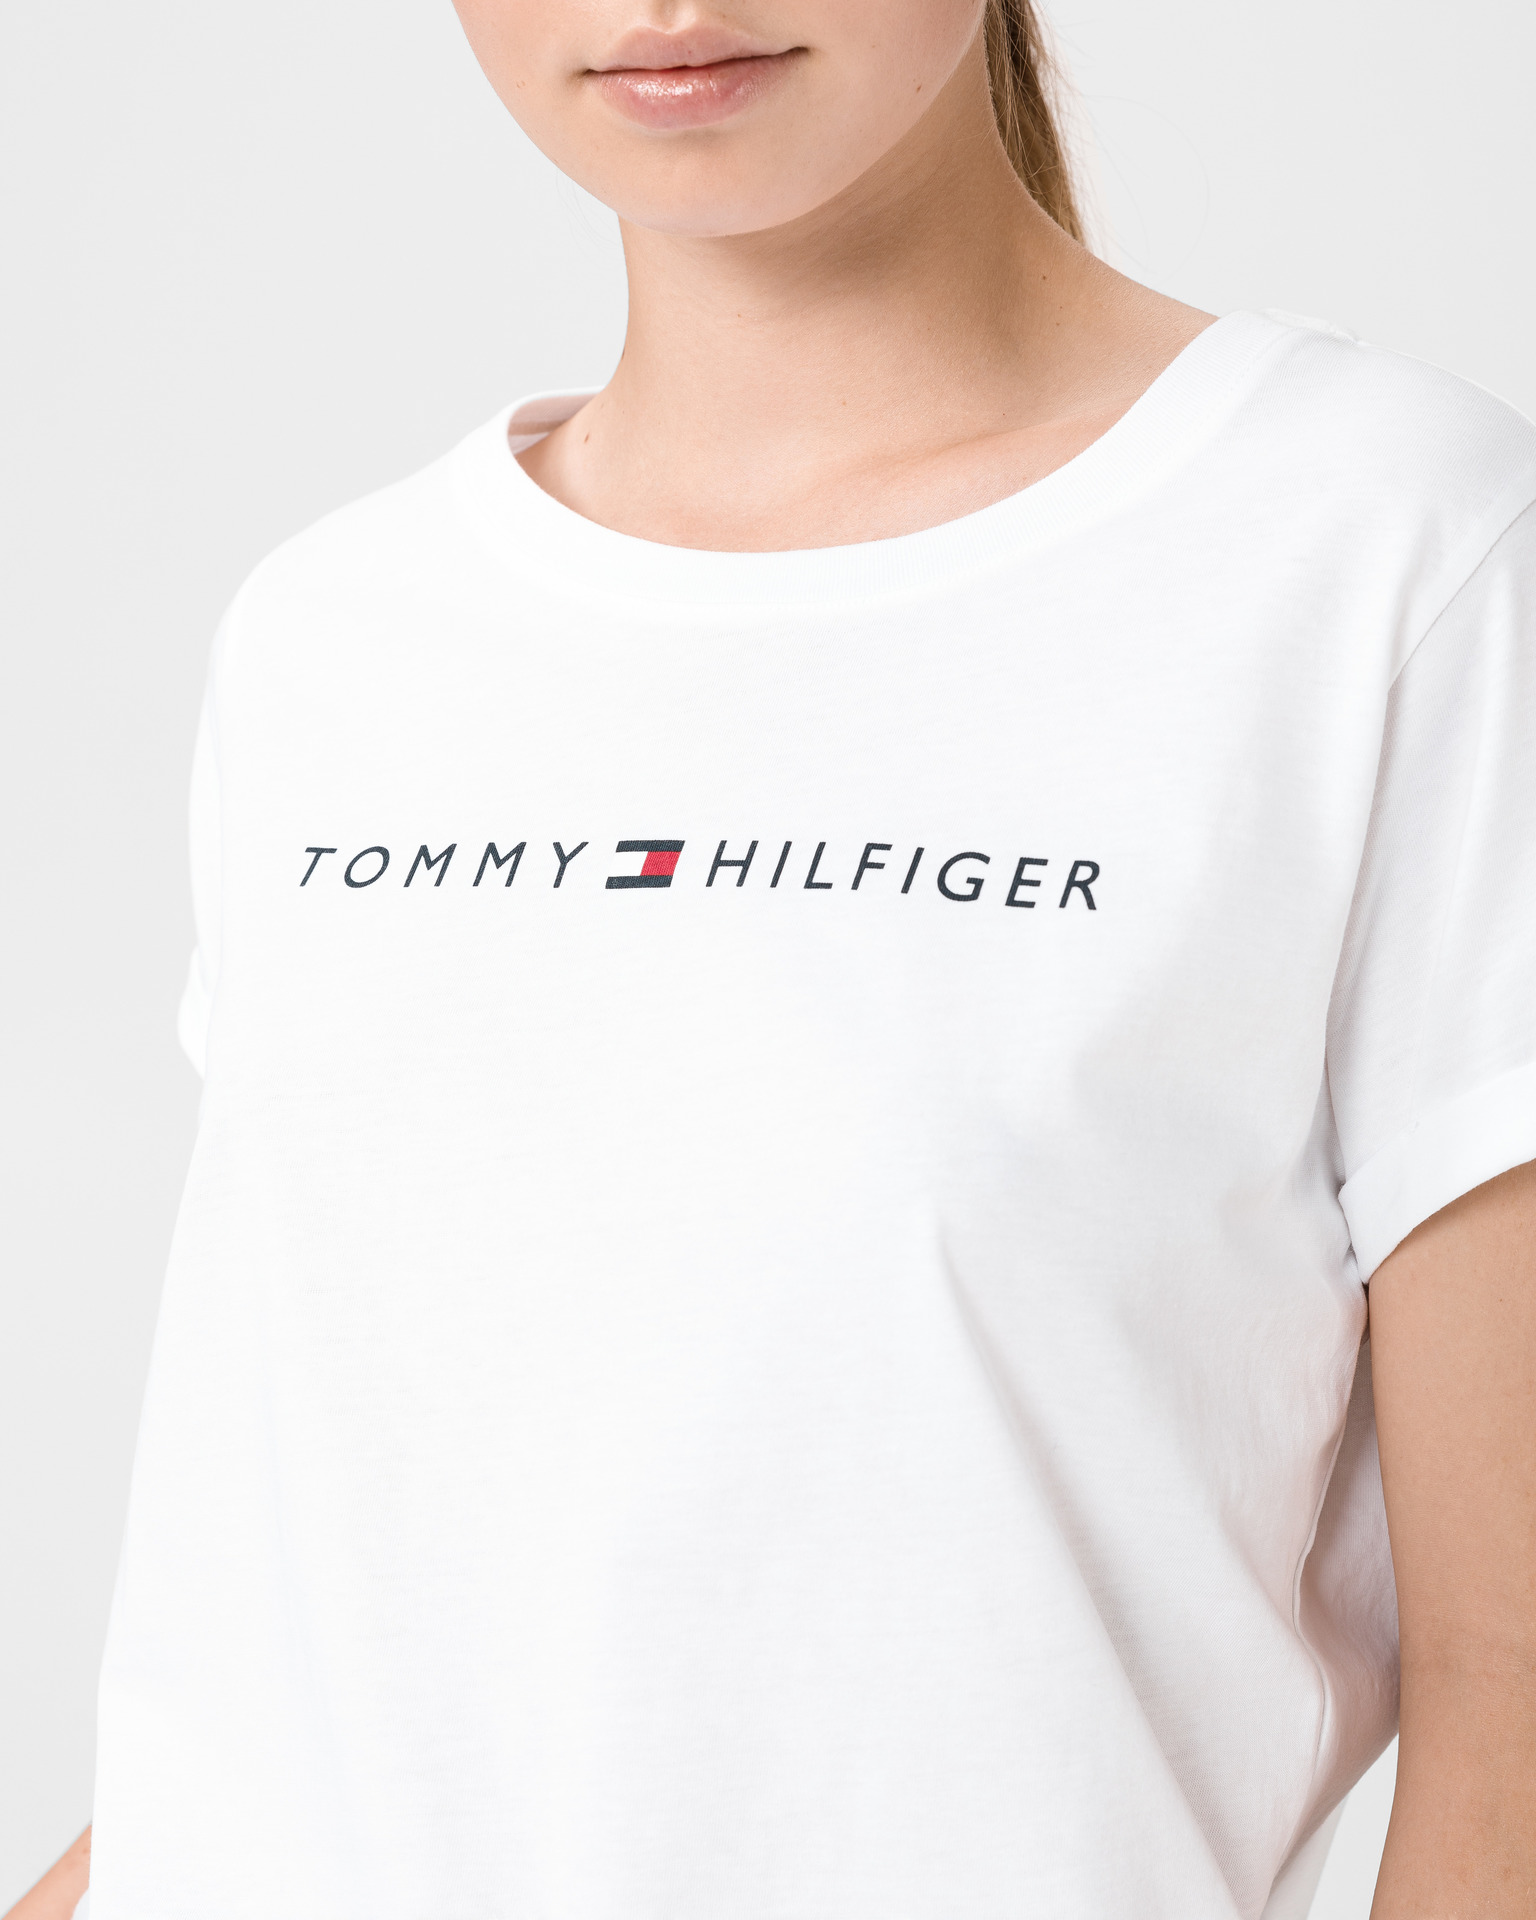 Tommy Hilfiger - Original T-shirt 